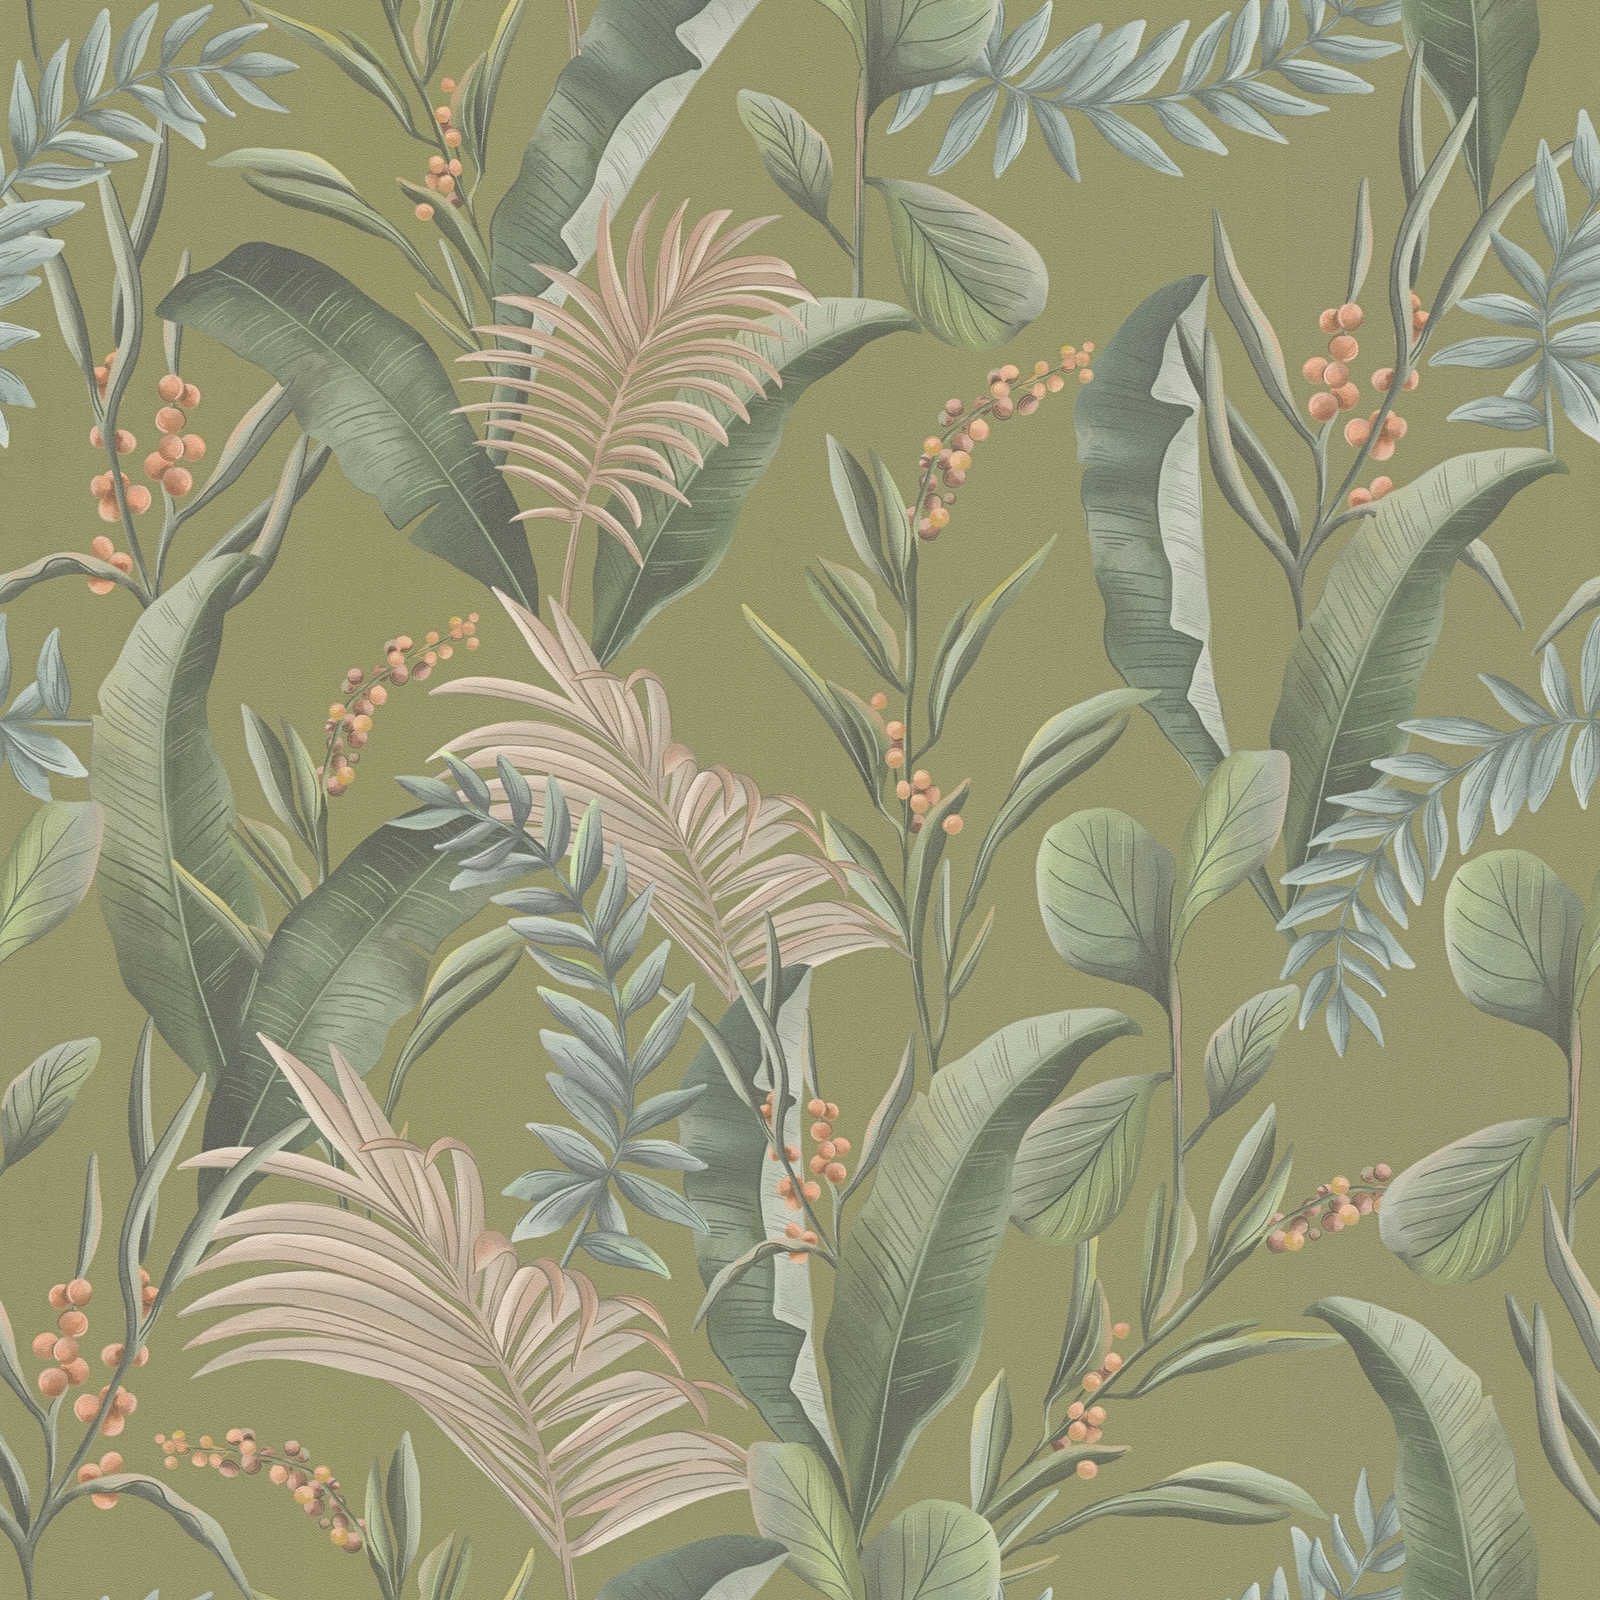 Jungle wallpaper floral with leaves matt textured - green, beige, orange
